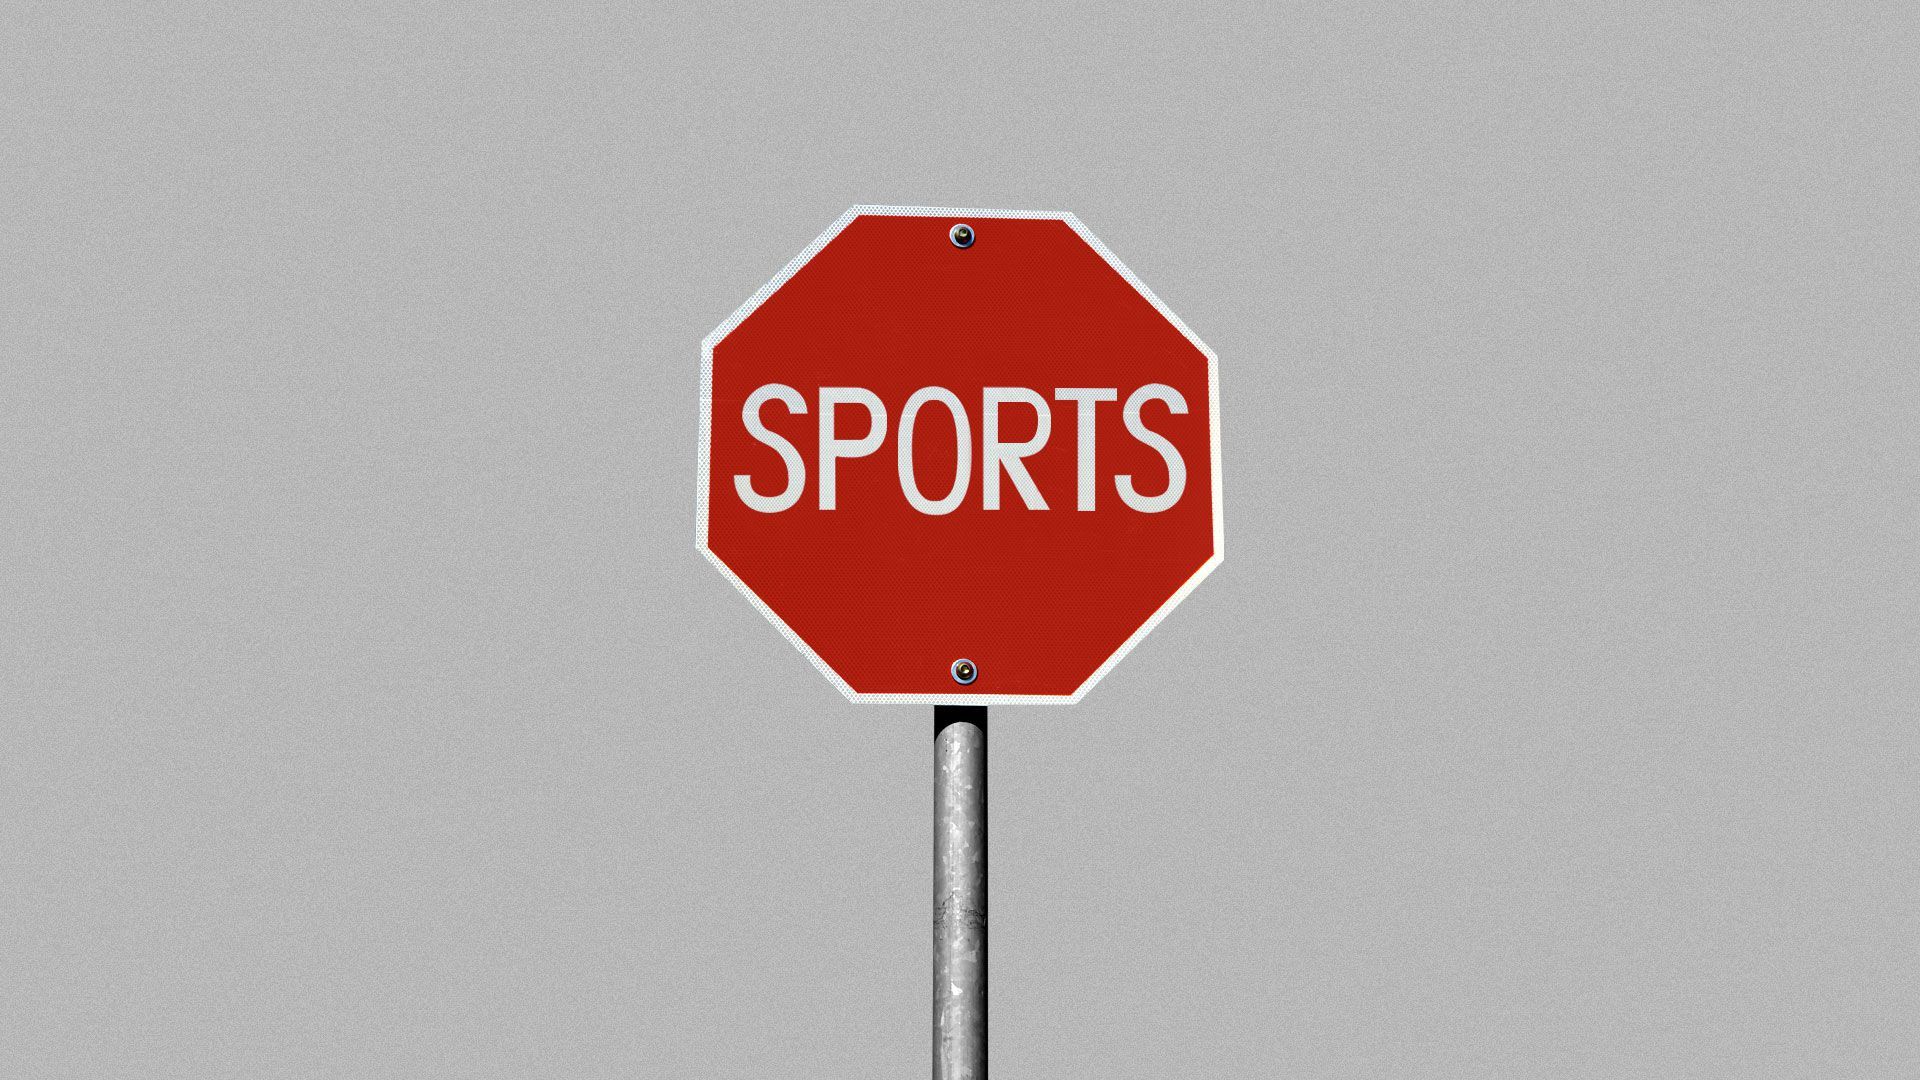 Illustration of "sports" written on stop sign